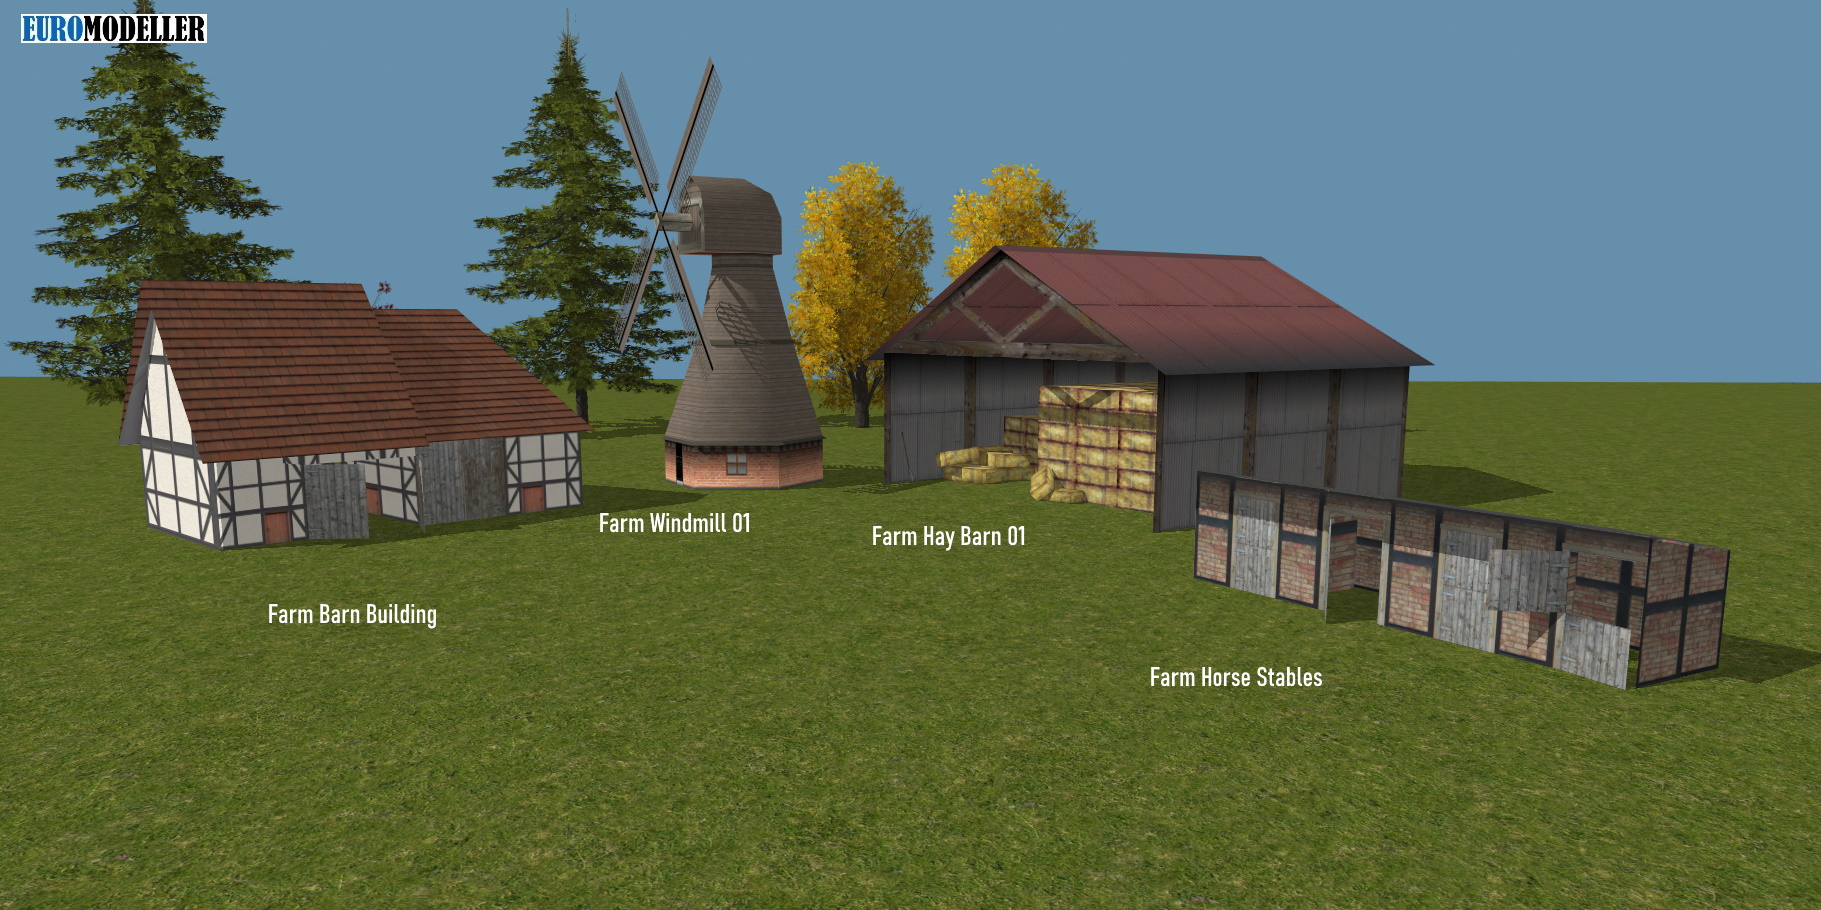 Farm  -Windmill - Barns - Stable